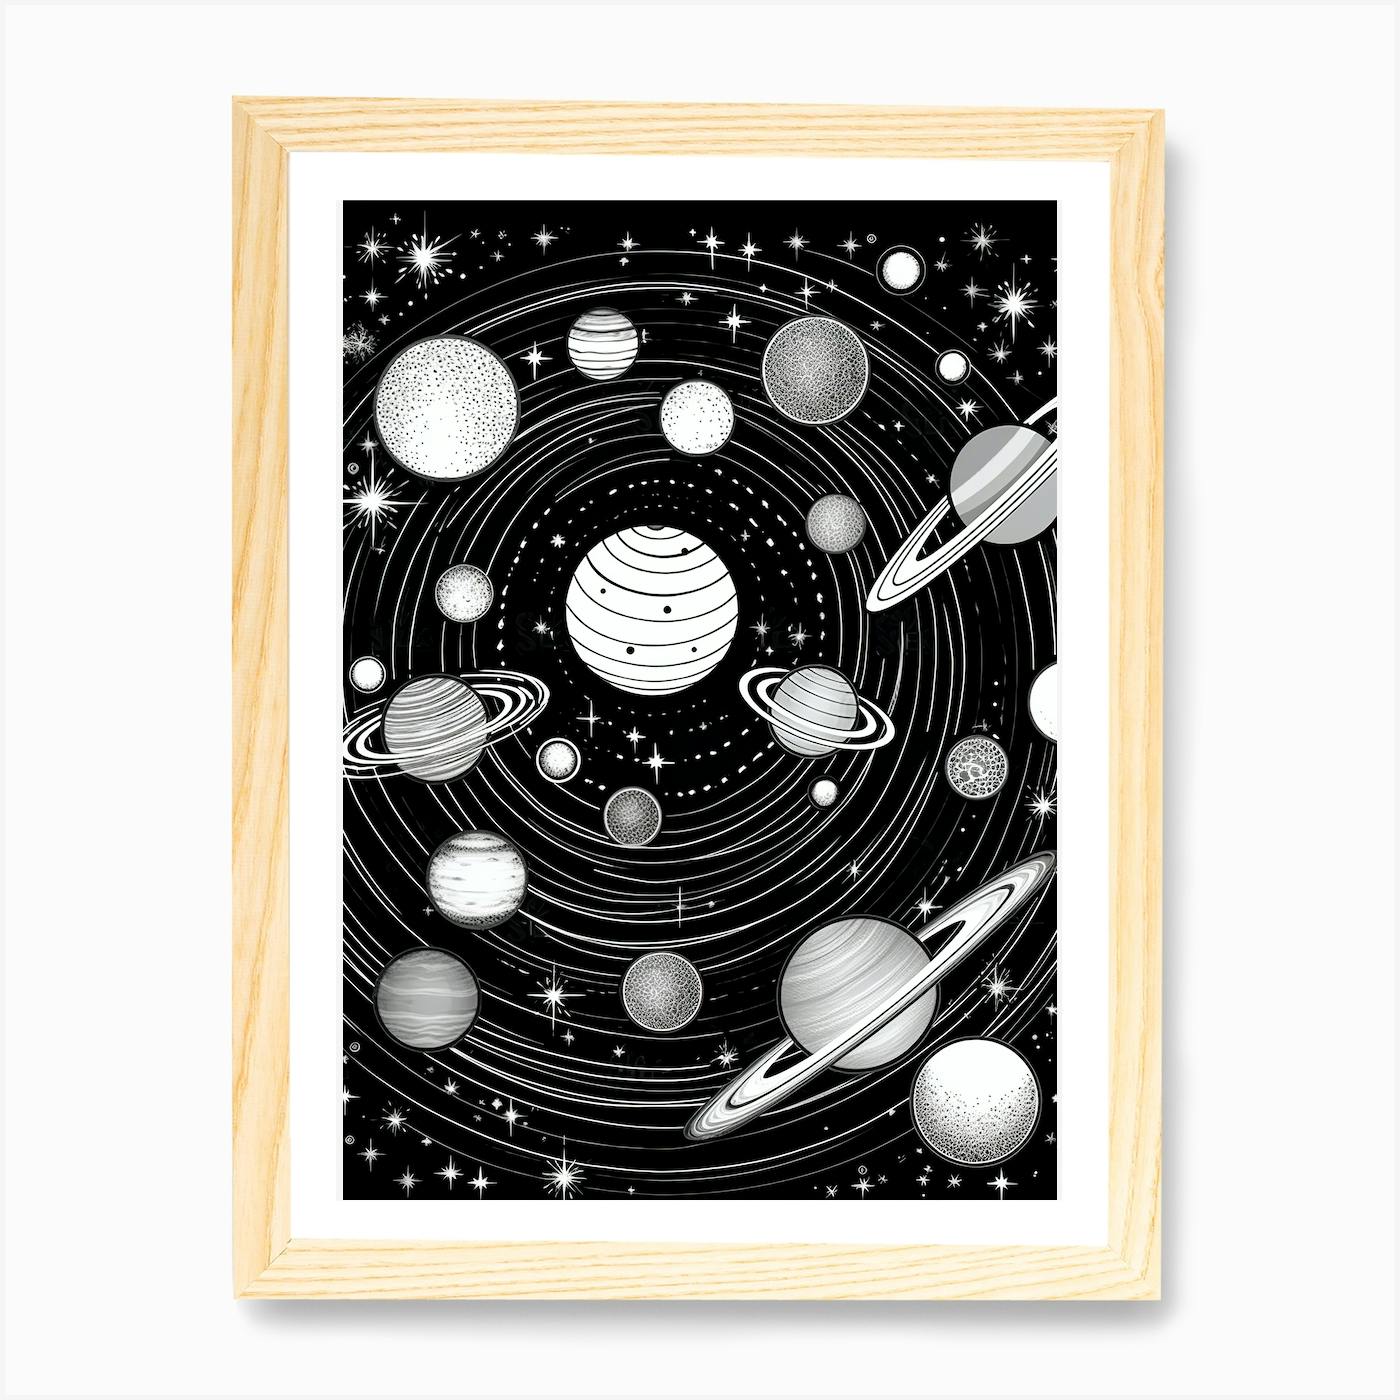 Solar System Images for Kids (Free Solar System Printables) - Edsys